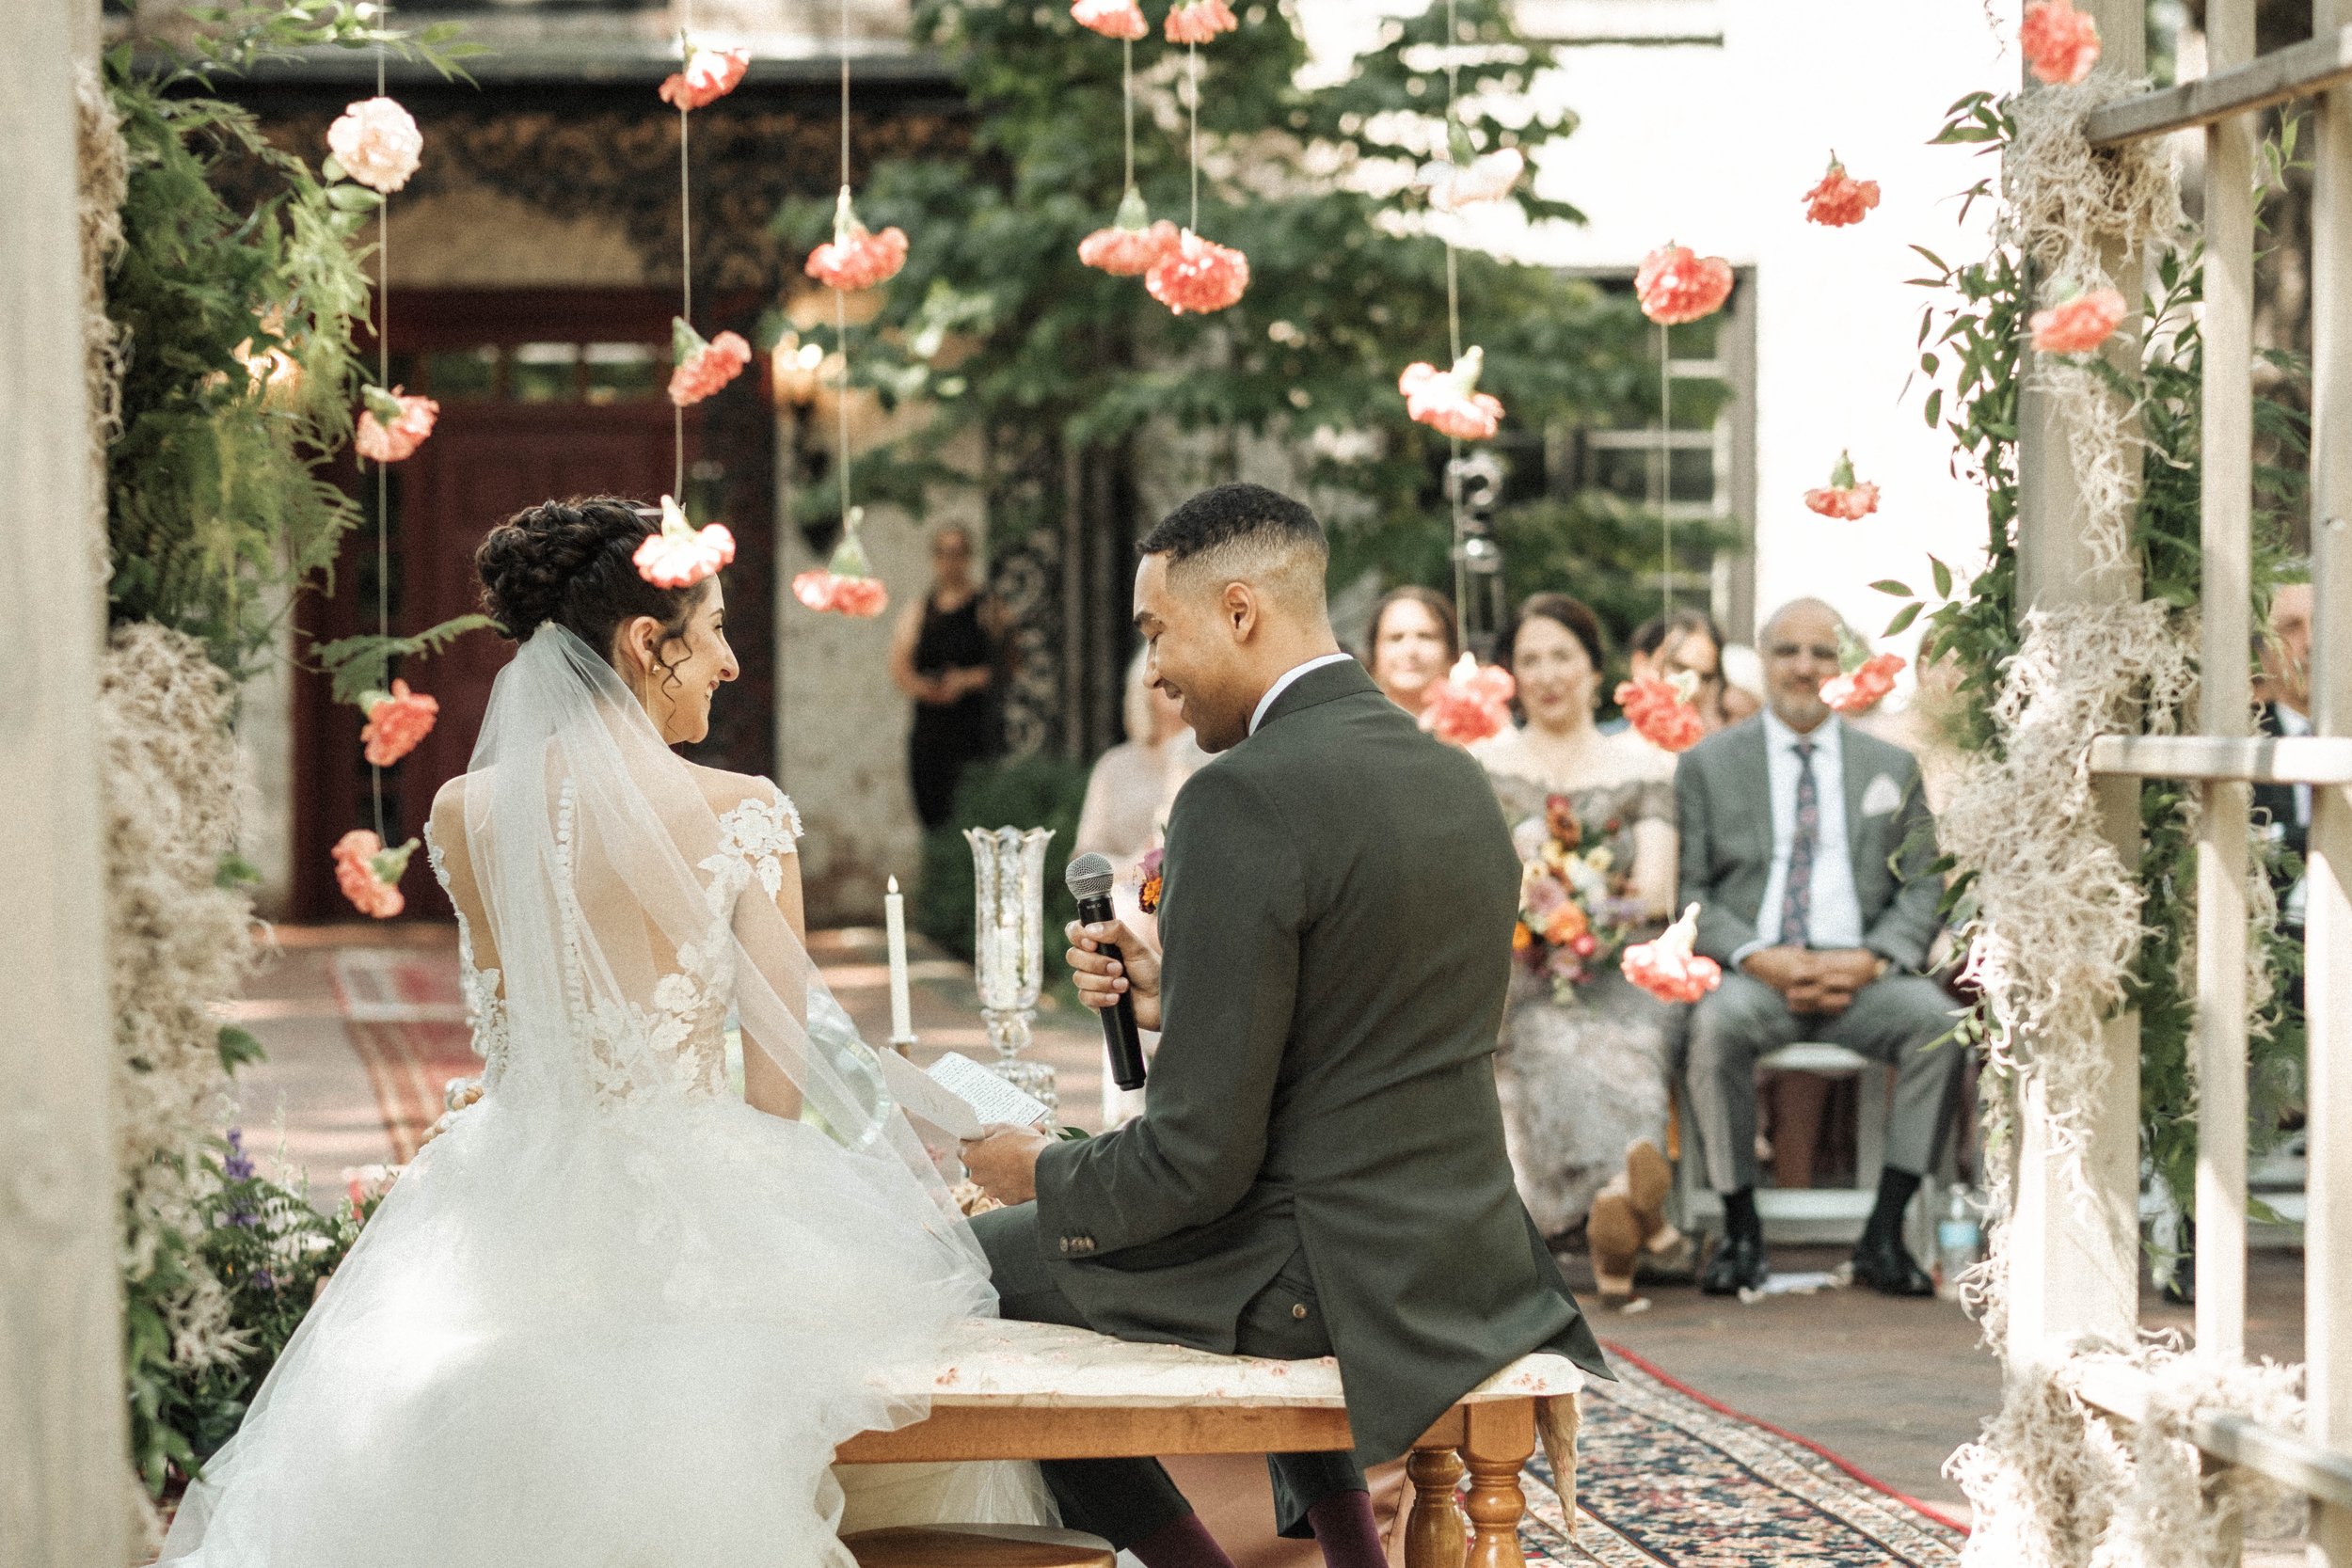  outdoor wedding ceremony 